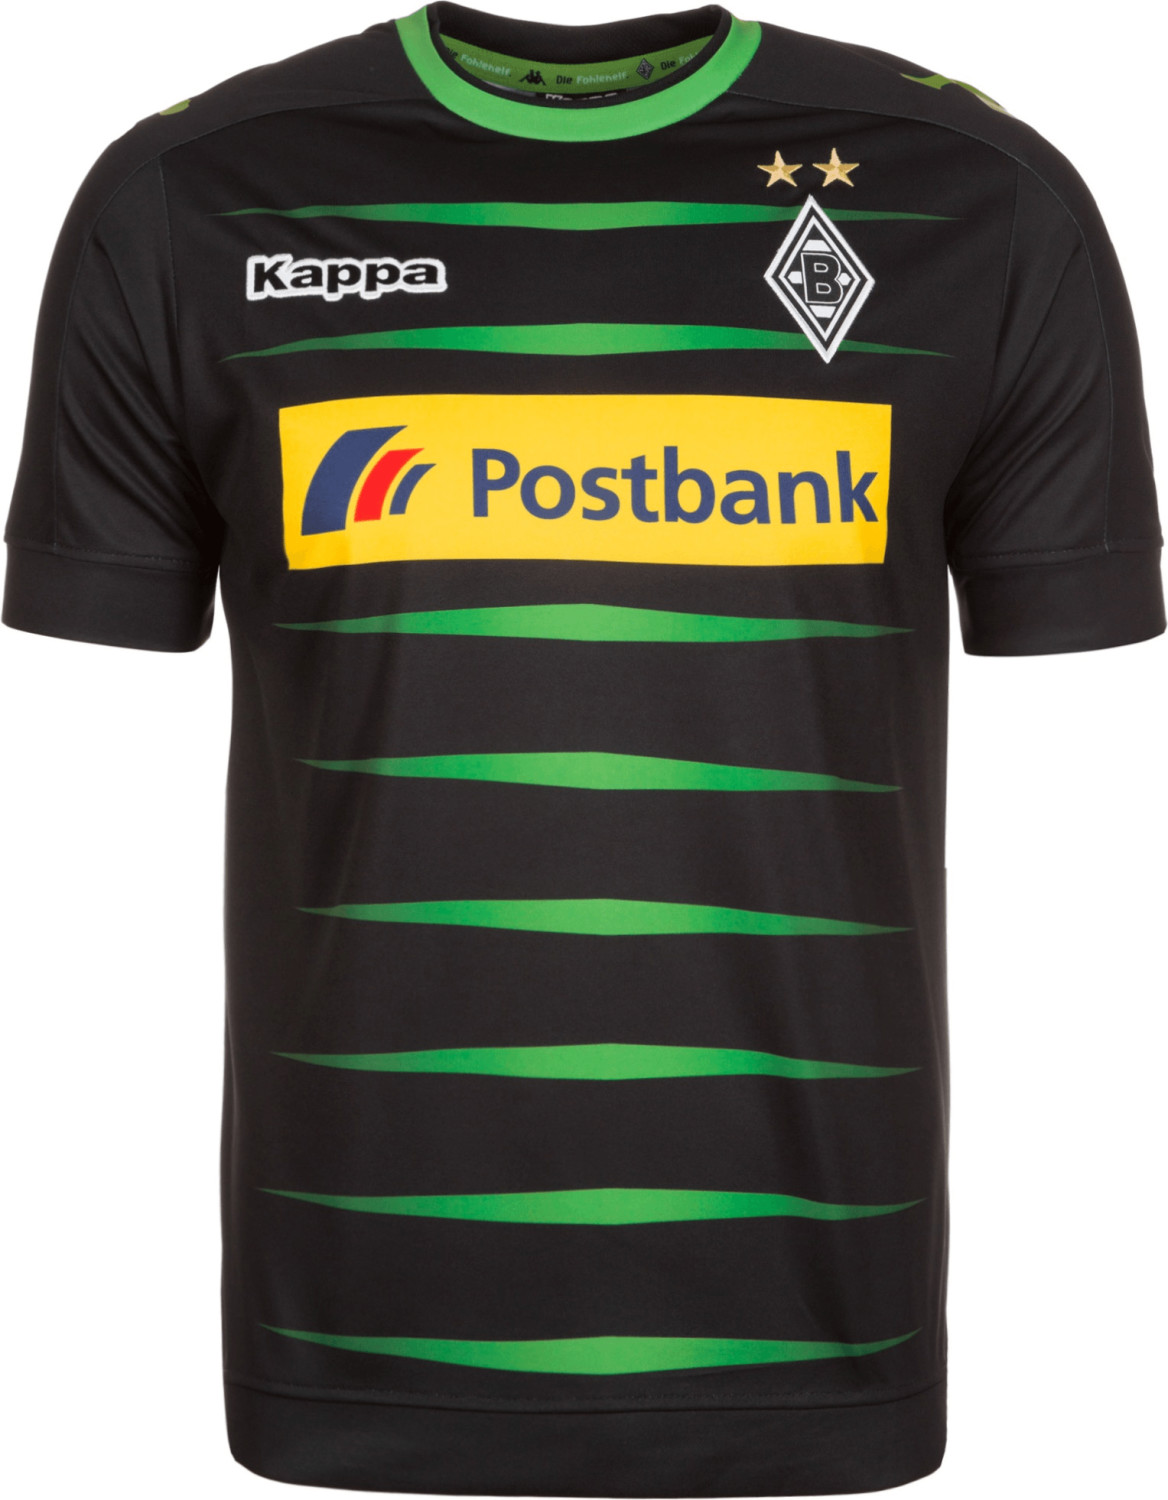 Kappa Borussia Mönchengladbach Champions League Trikot 2016/2017